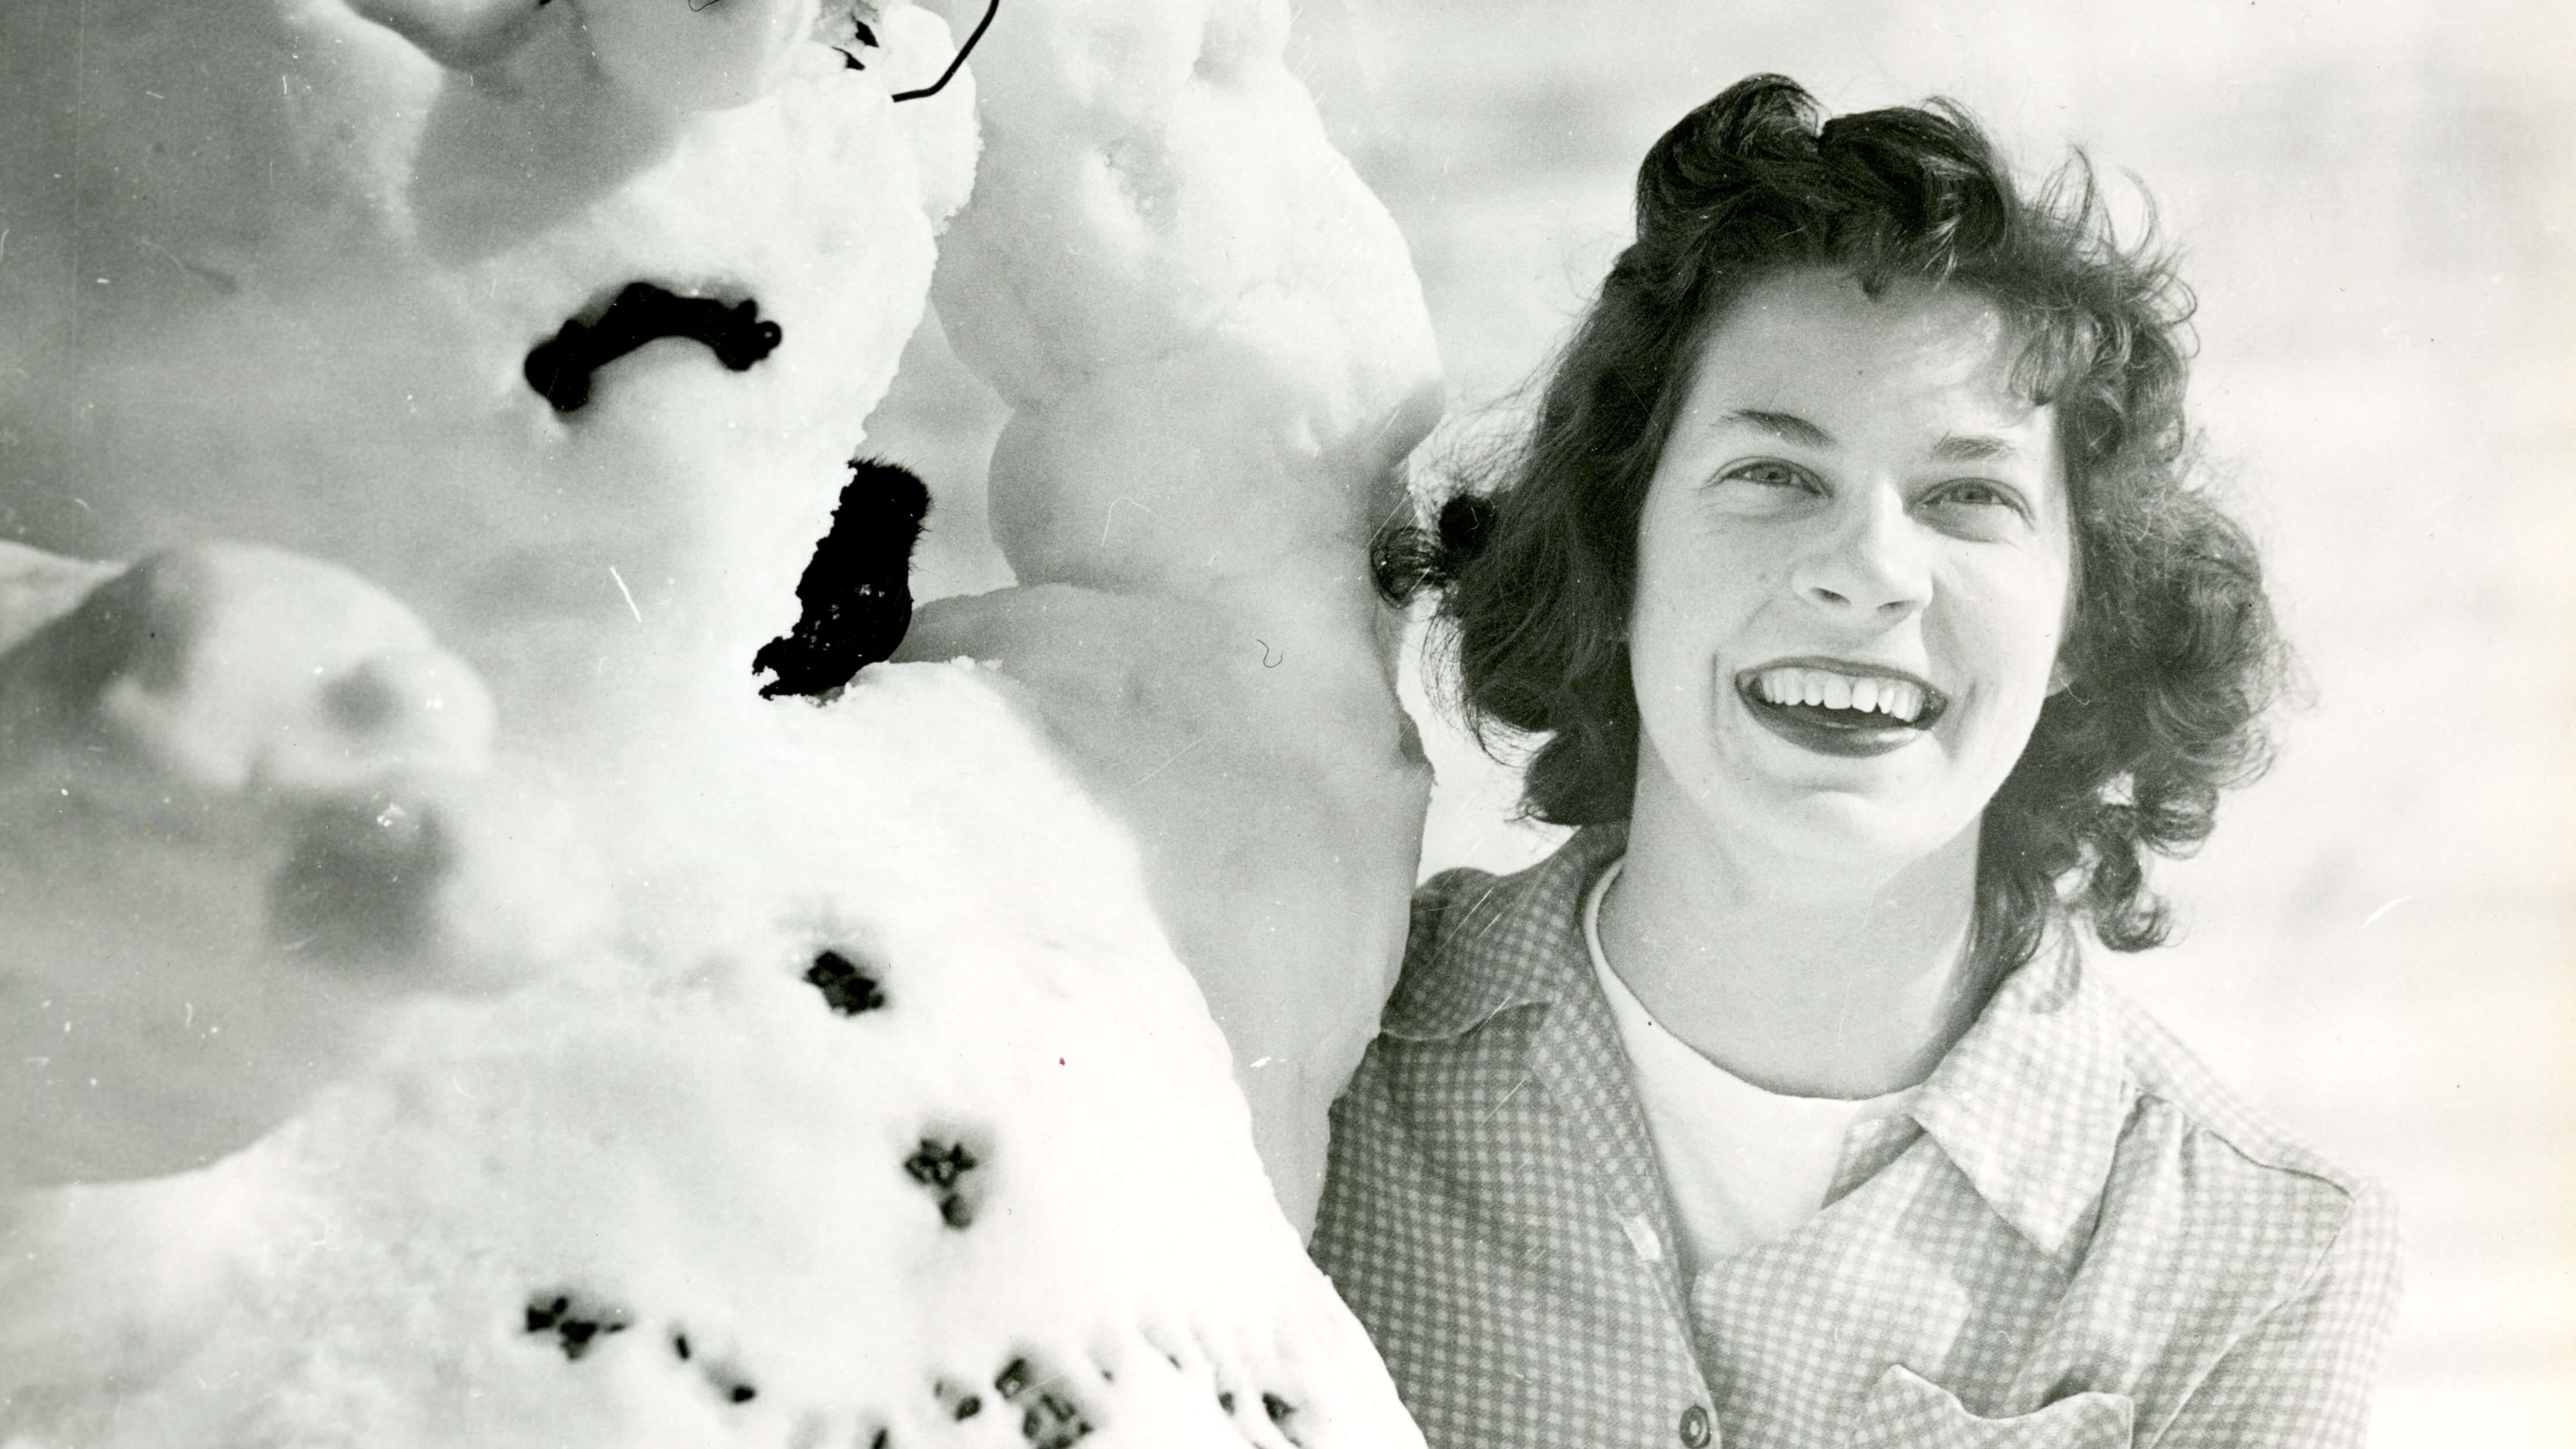 A woman smiles next to a snow man